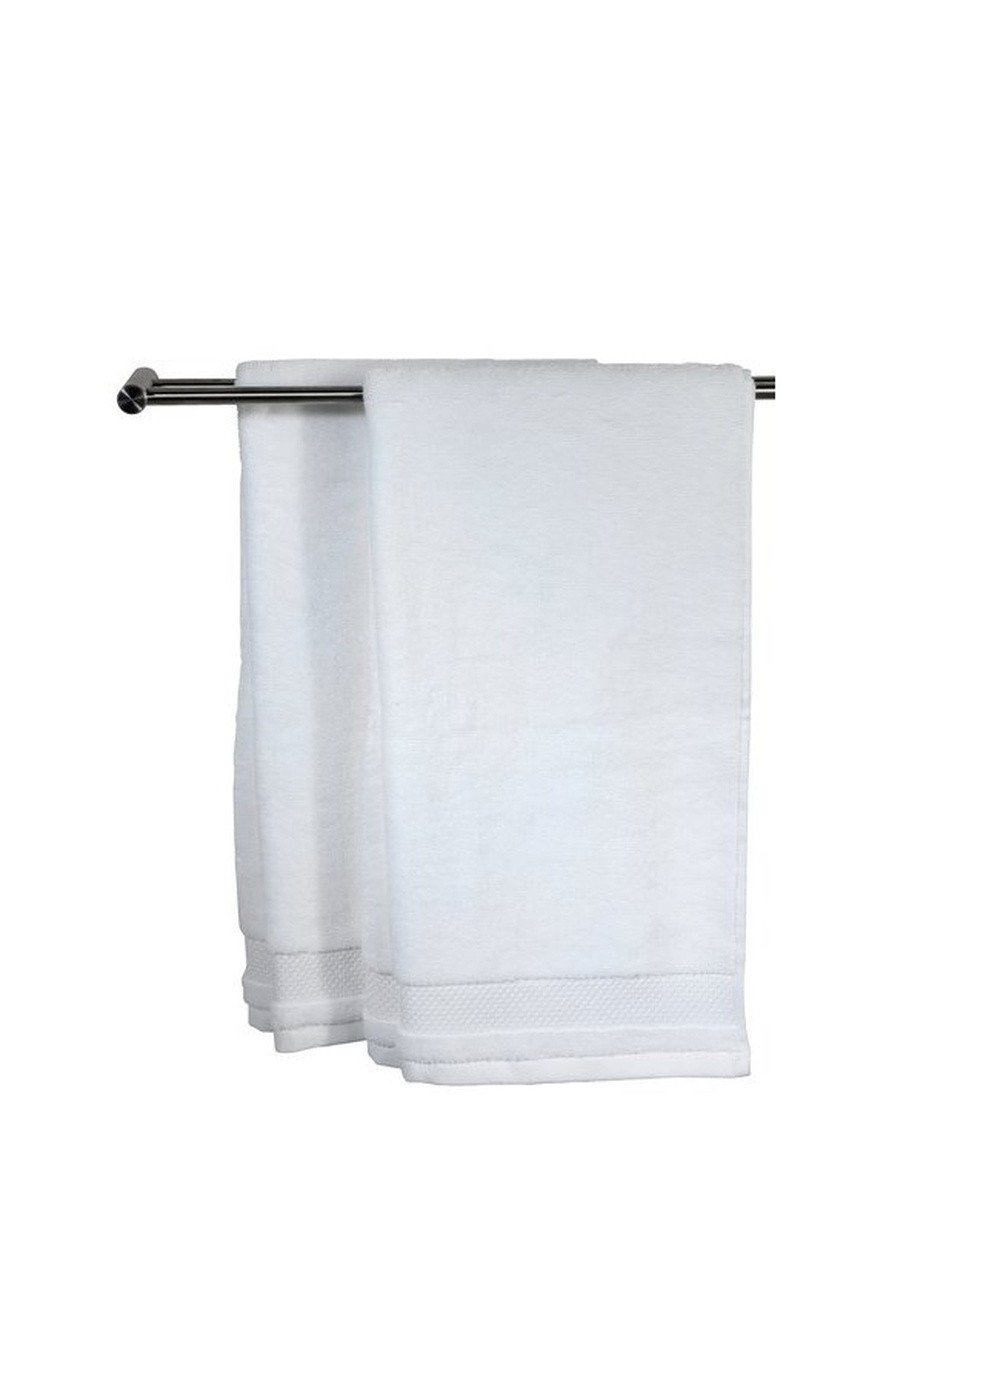 No Brand полотенце хлопок 70х140см белое белый производство - Китай